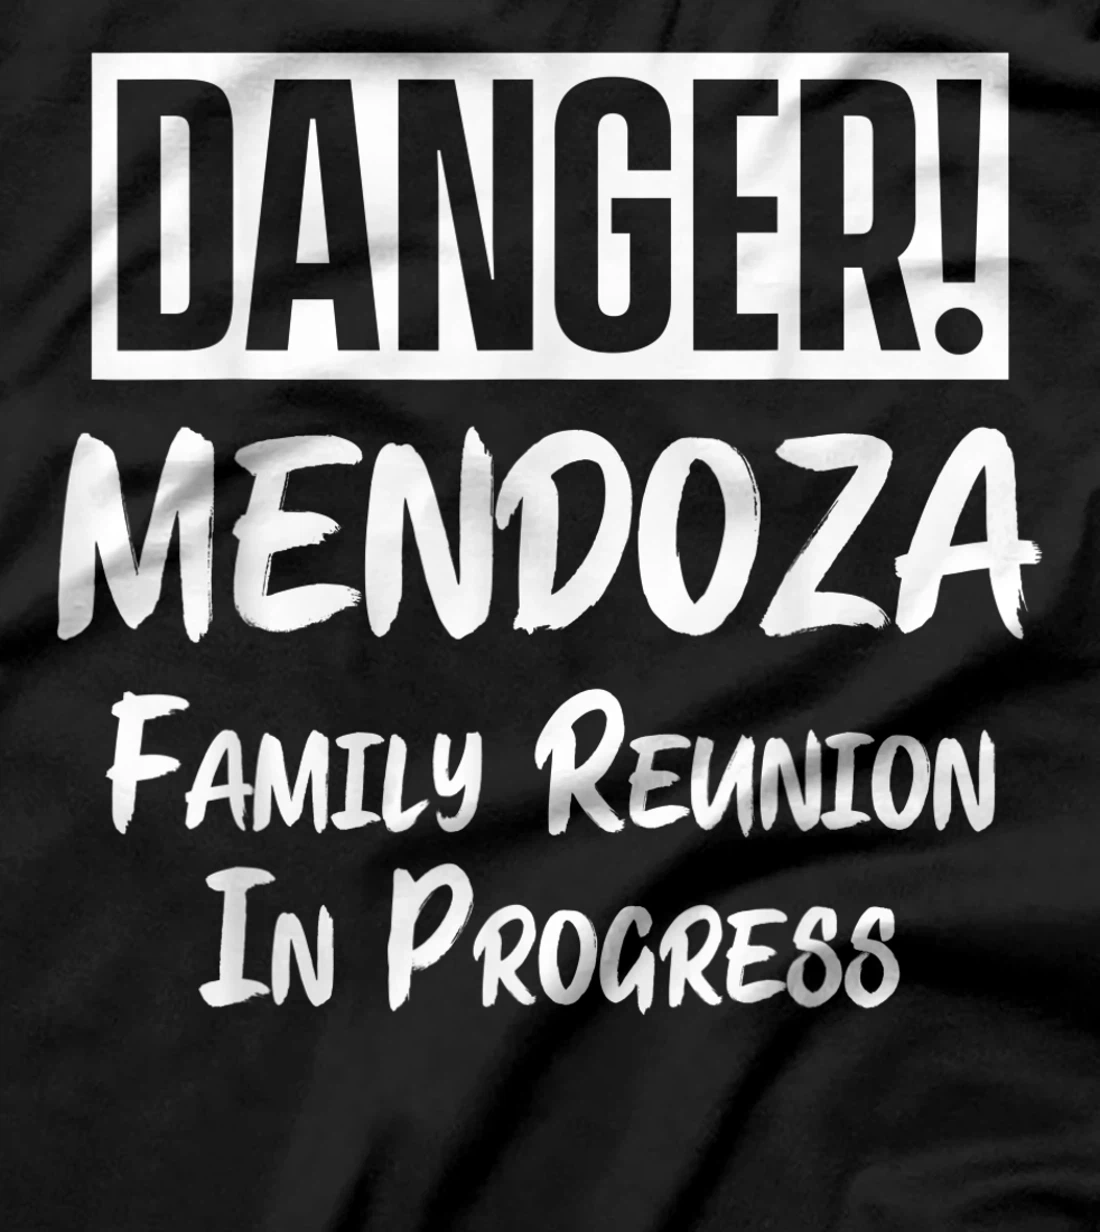 MENDOZA Last Name Shirt Custom Name Shirt Family Reunion Family Name T Shirt 